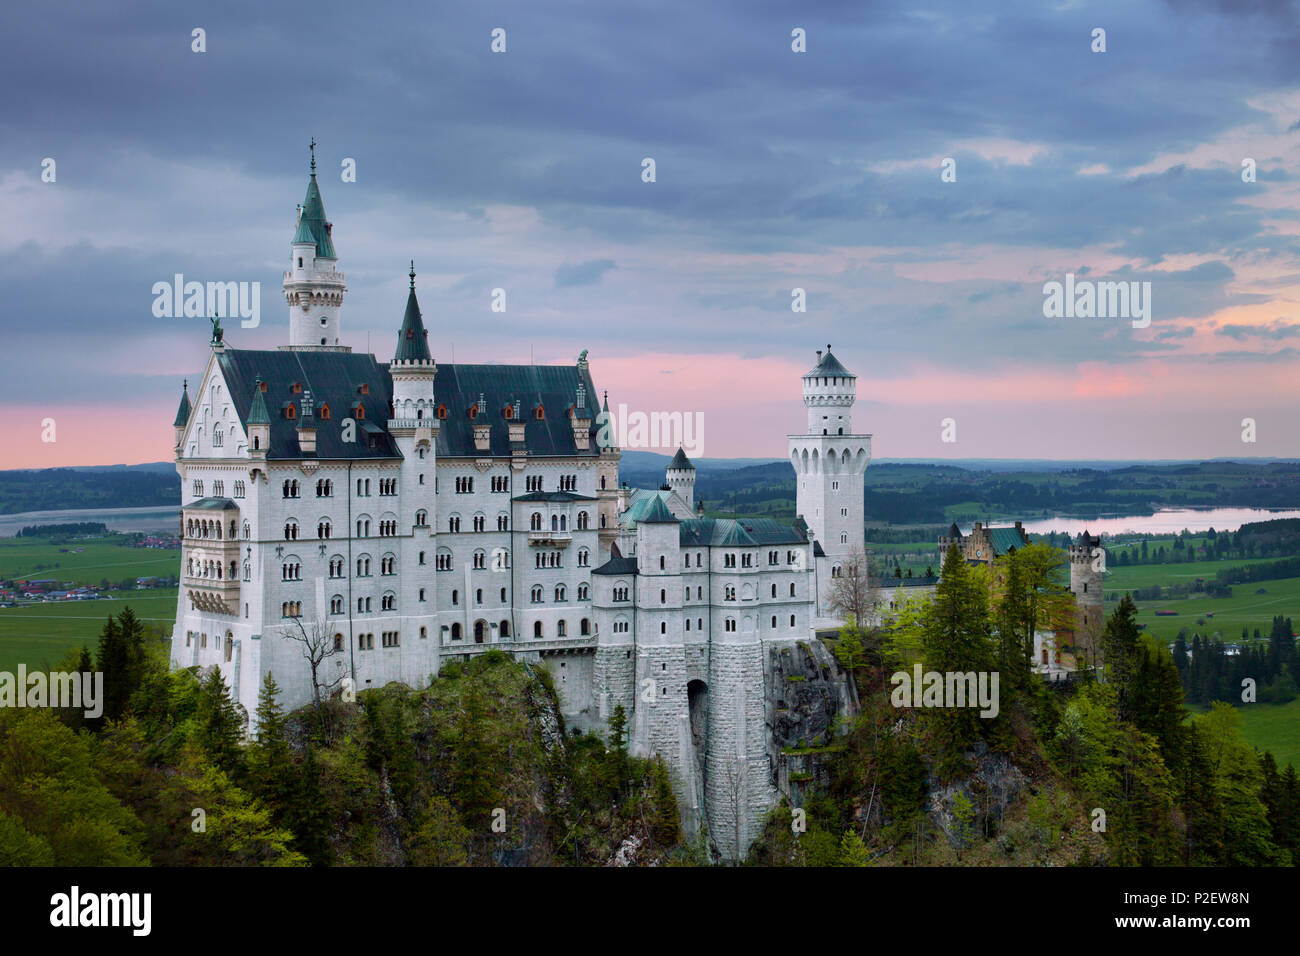 Sunset, Neuschwanstein Castle, Castle, Fairytale Castle, Bavaria, Germany Stock Photo